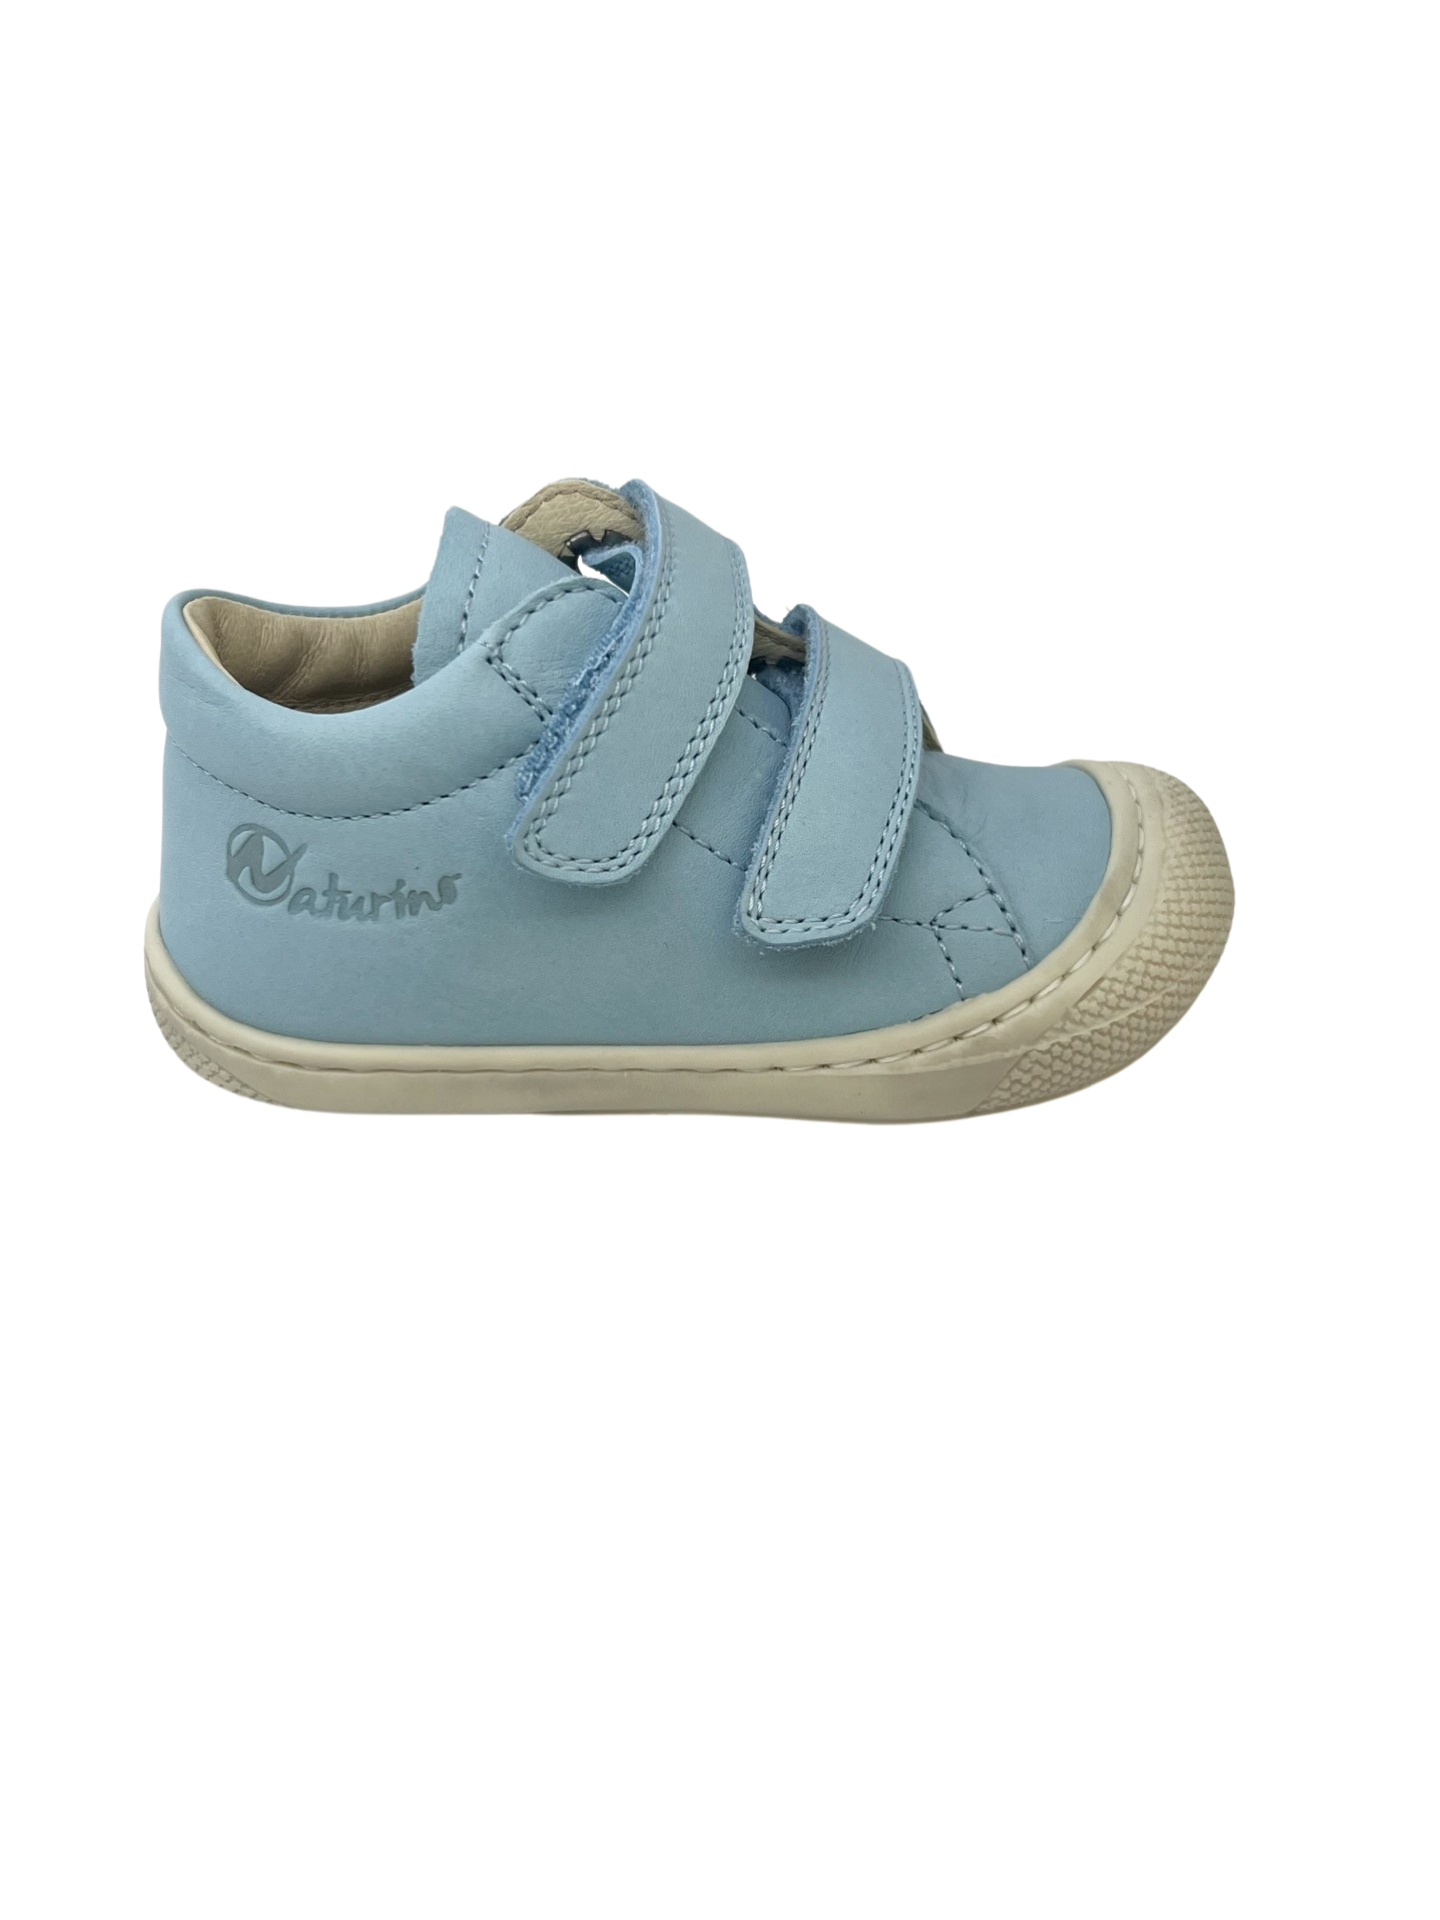 Naturino Sky Blue Velcro Baby Sneaker - Cocoon